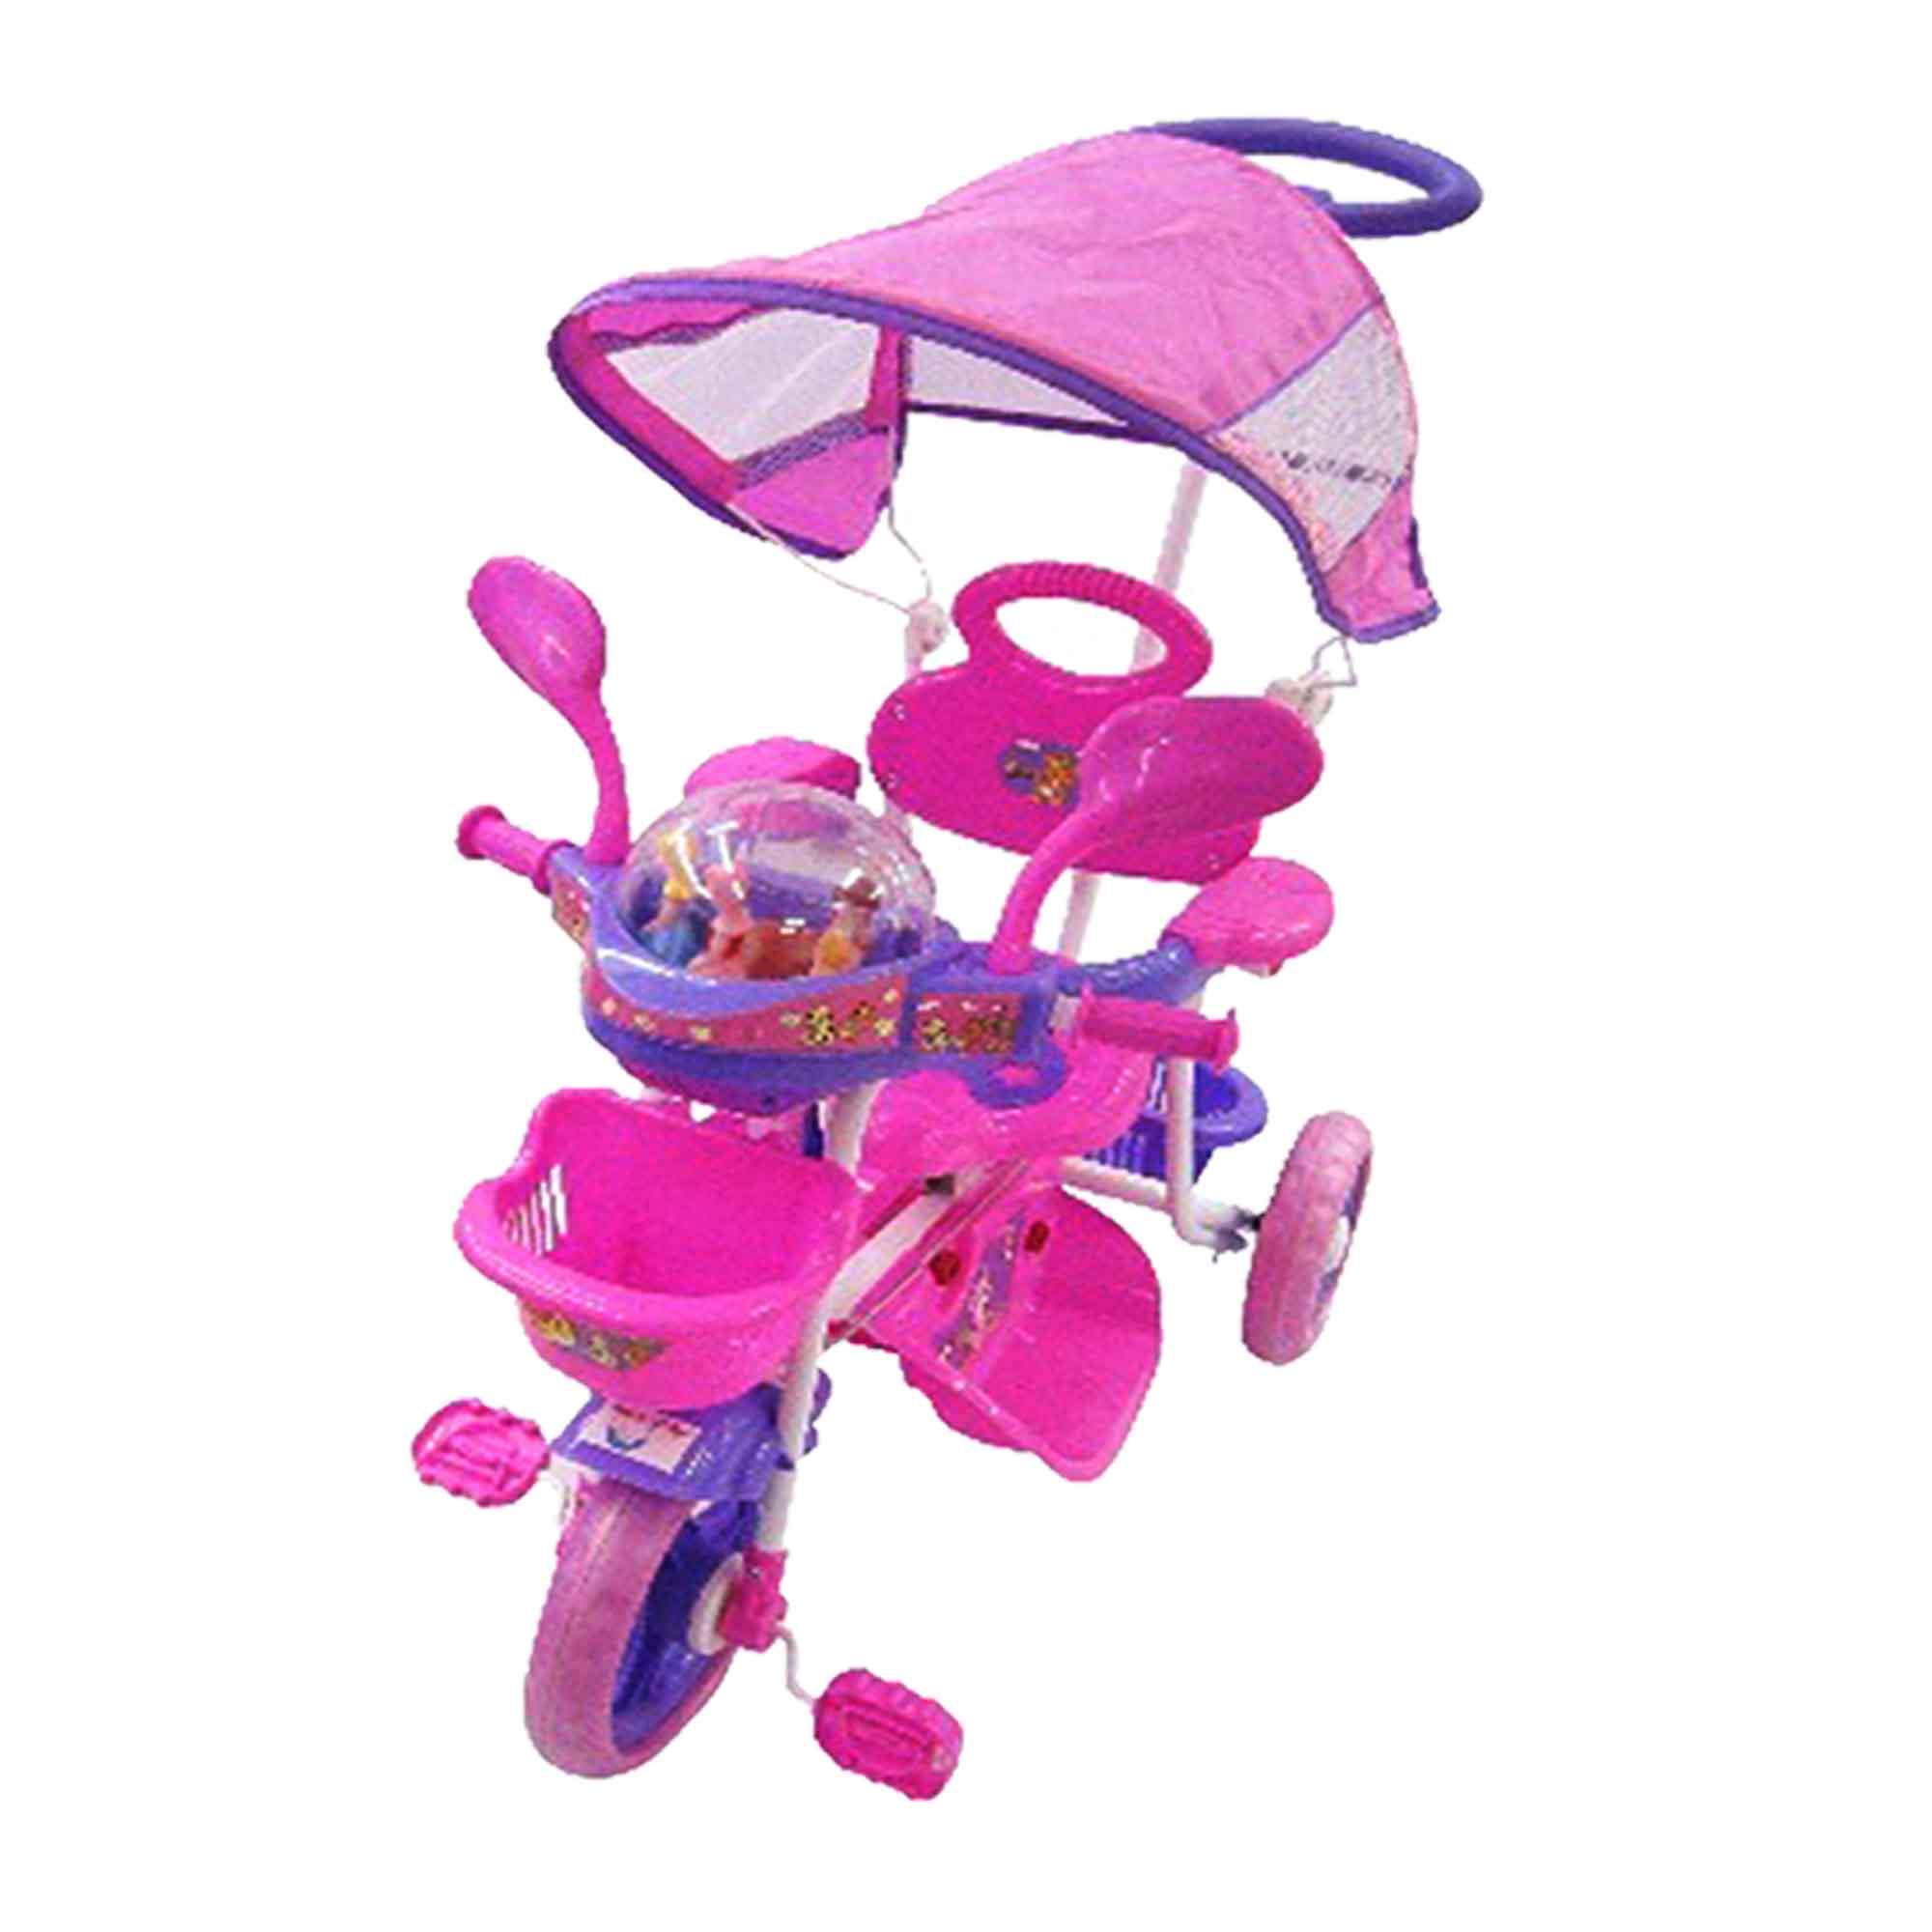 car bike for baby